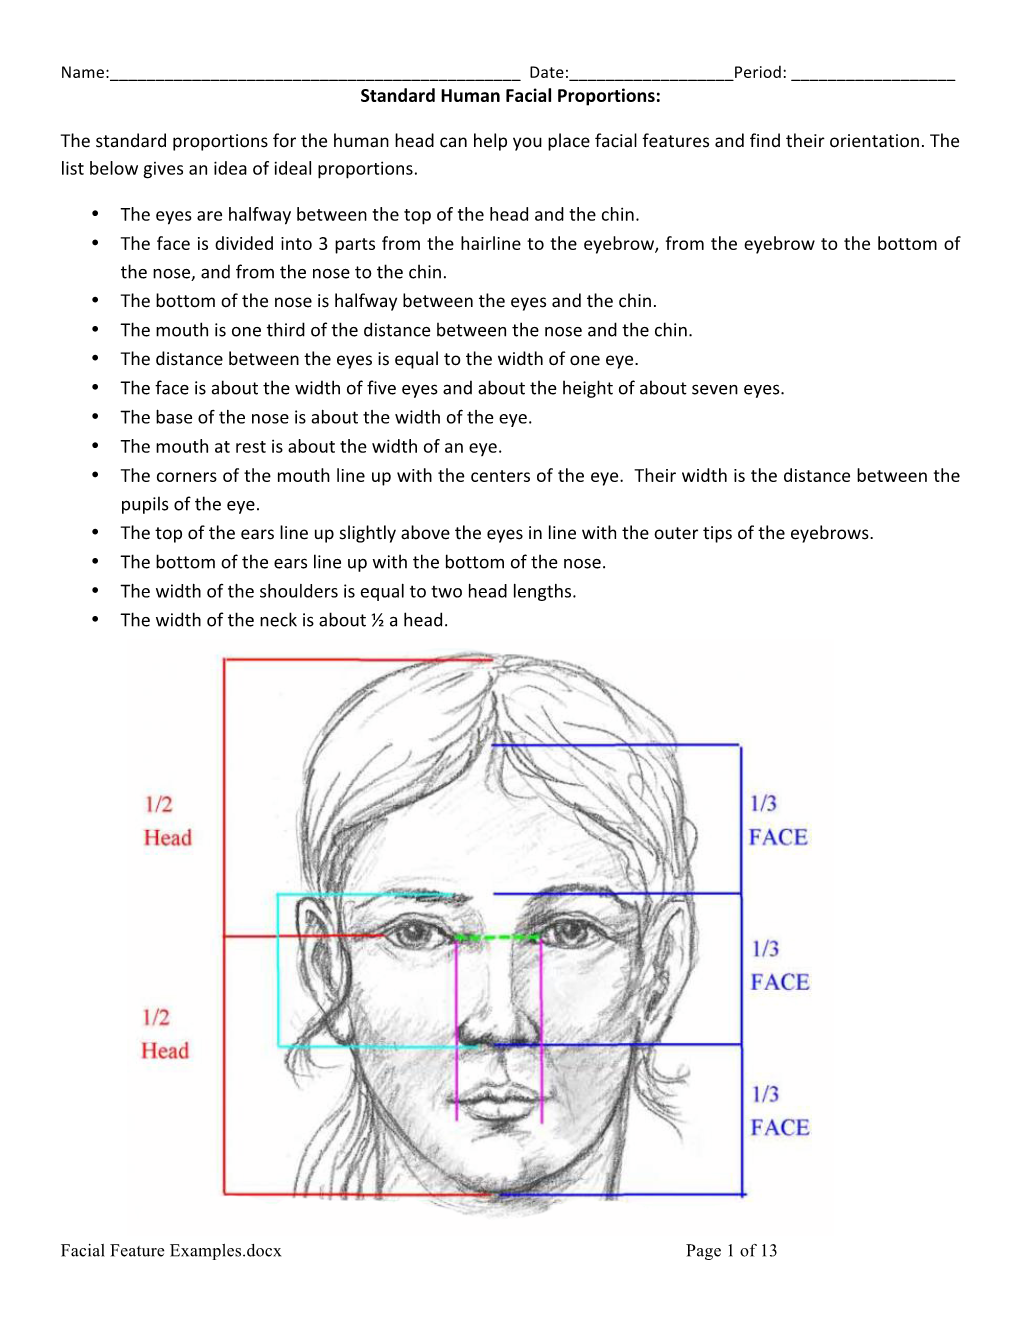 Standard Human Facial Proportions